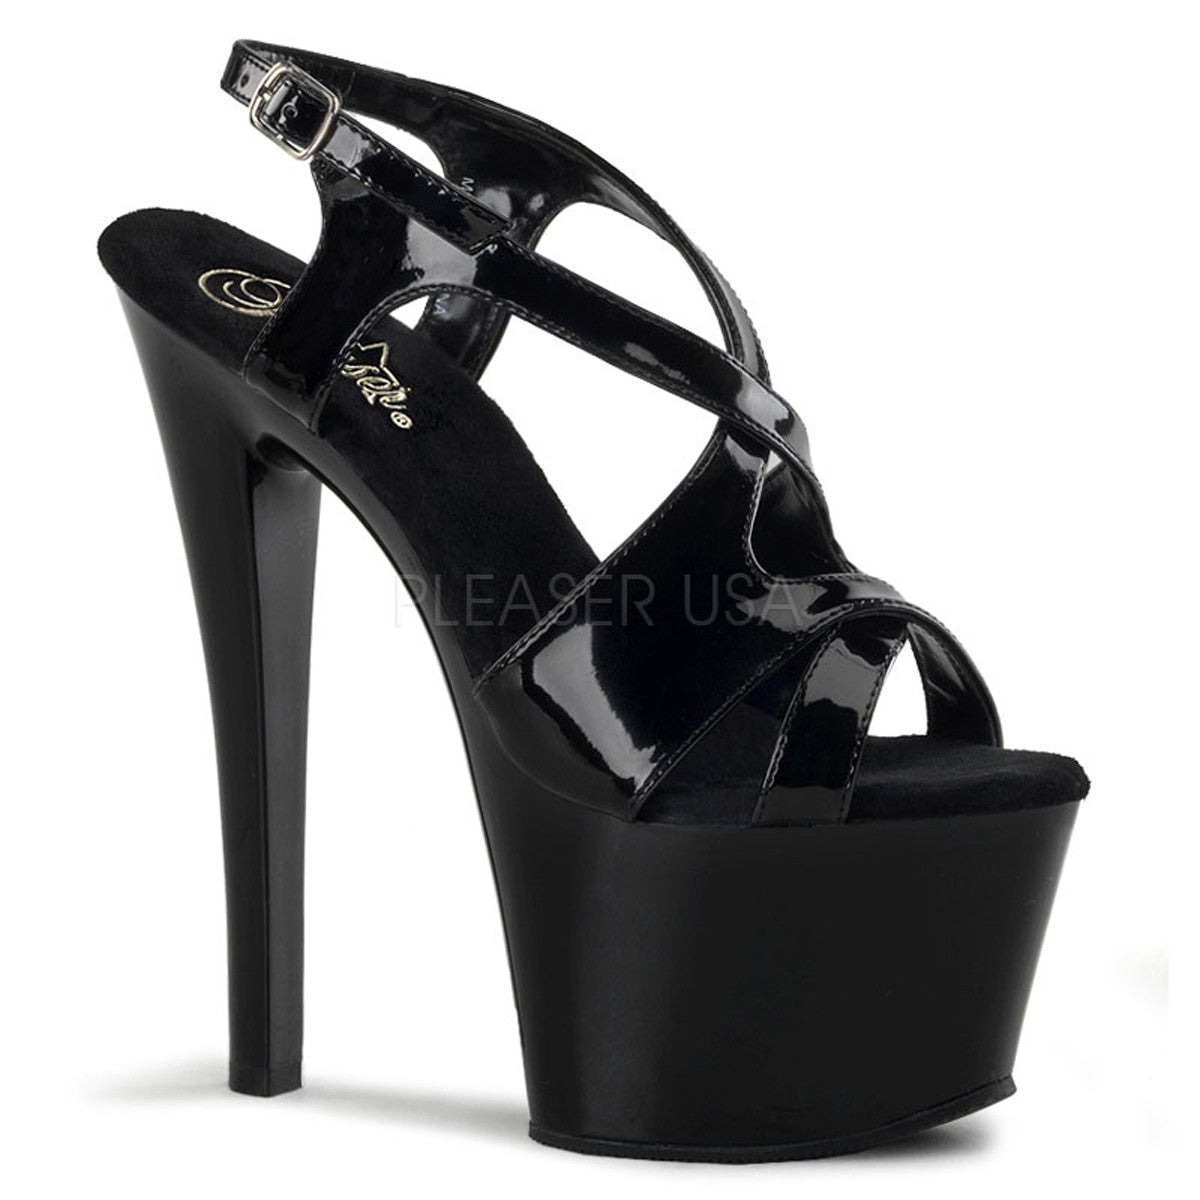 Pleaser,Black Patent Cross Strappy Platform High Heels - Shoecup.com